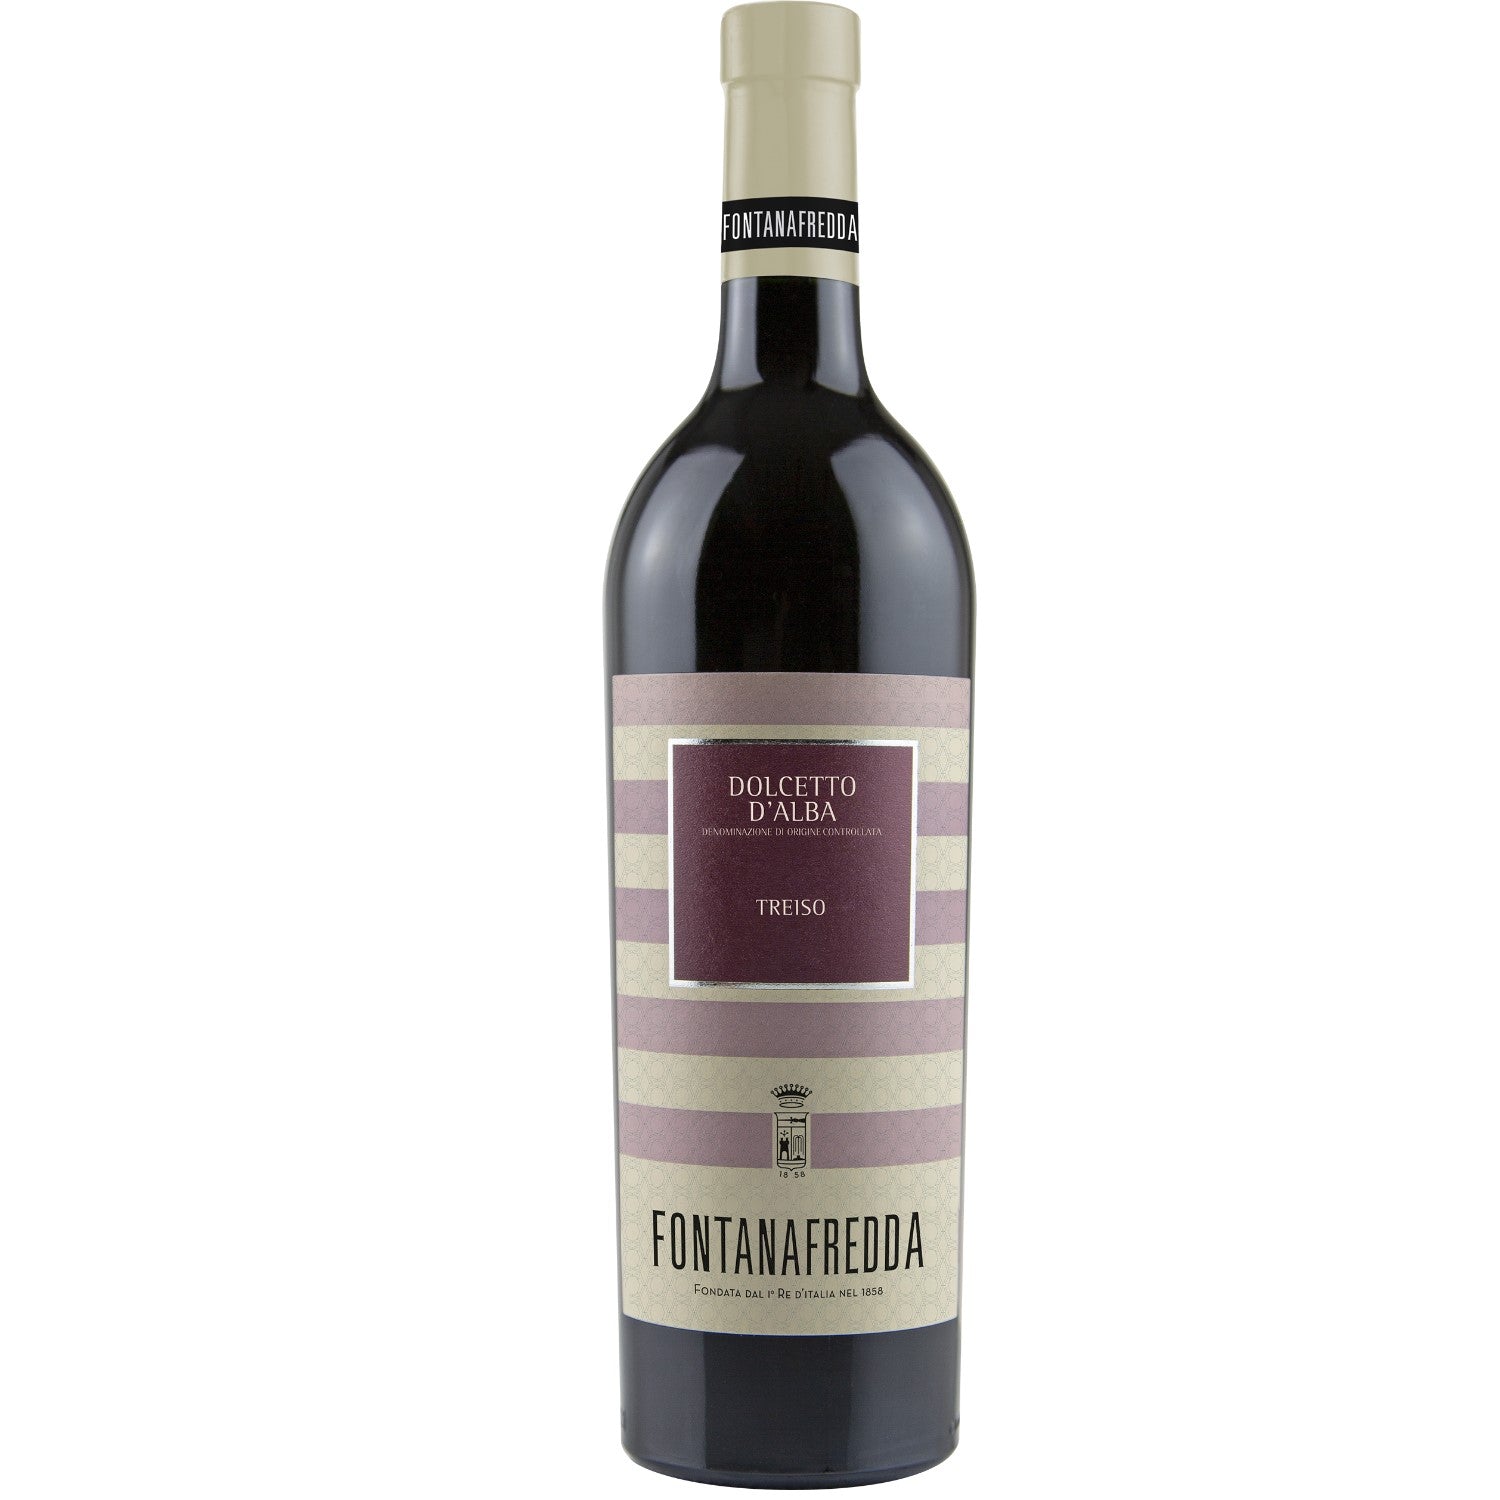 Fontanafredda Treiso Dolcetto d'Alba DOC Rotwein Wein trocken Italien (6 x 0.75l) - Versanel -